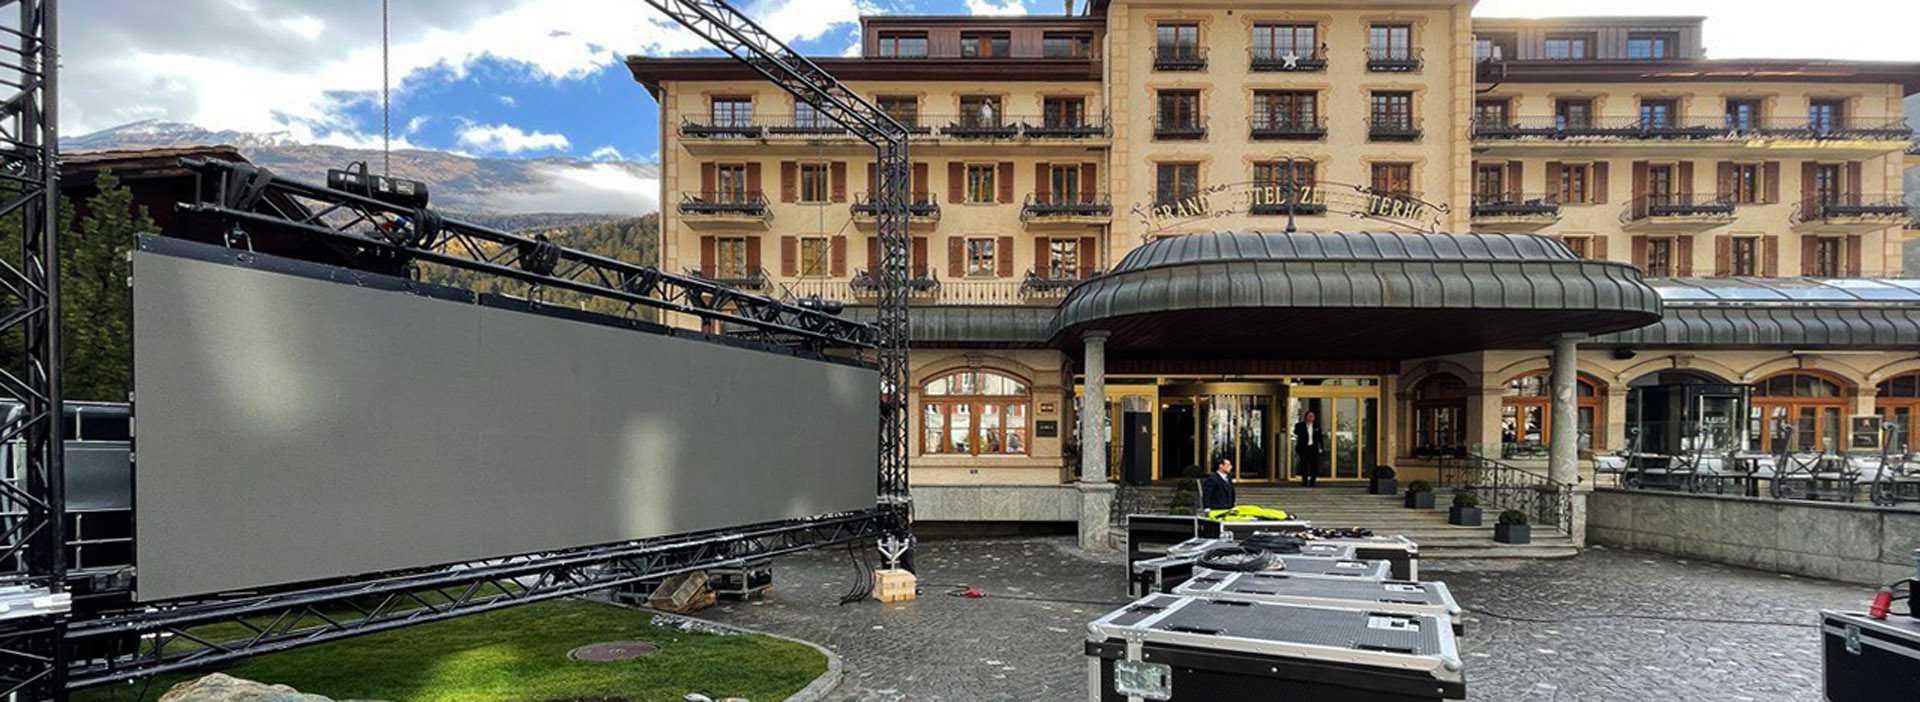 LED-Screen Grand Hotel Zermatt